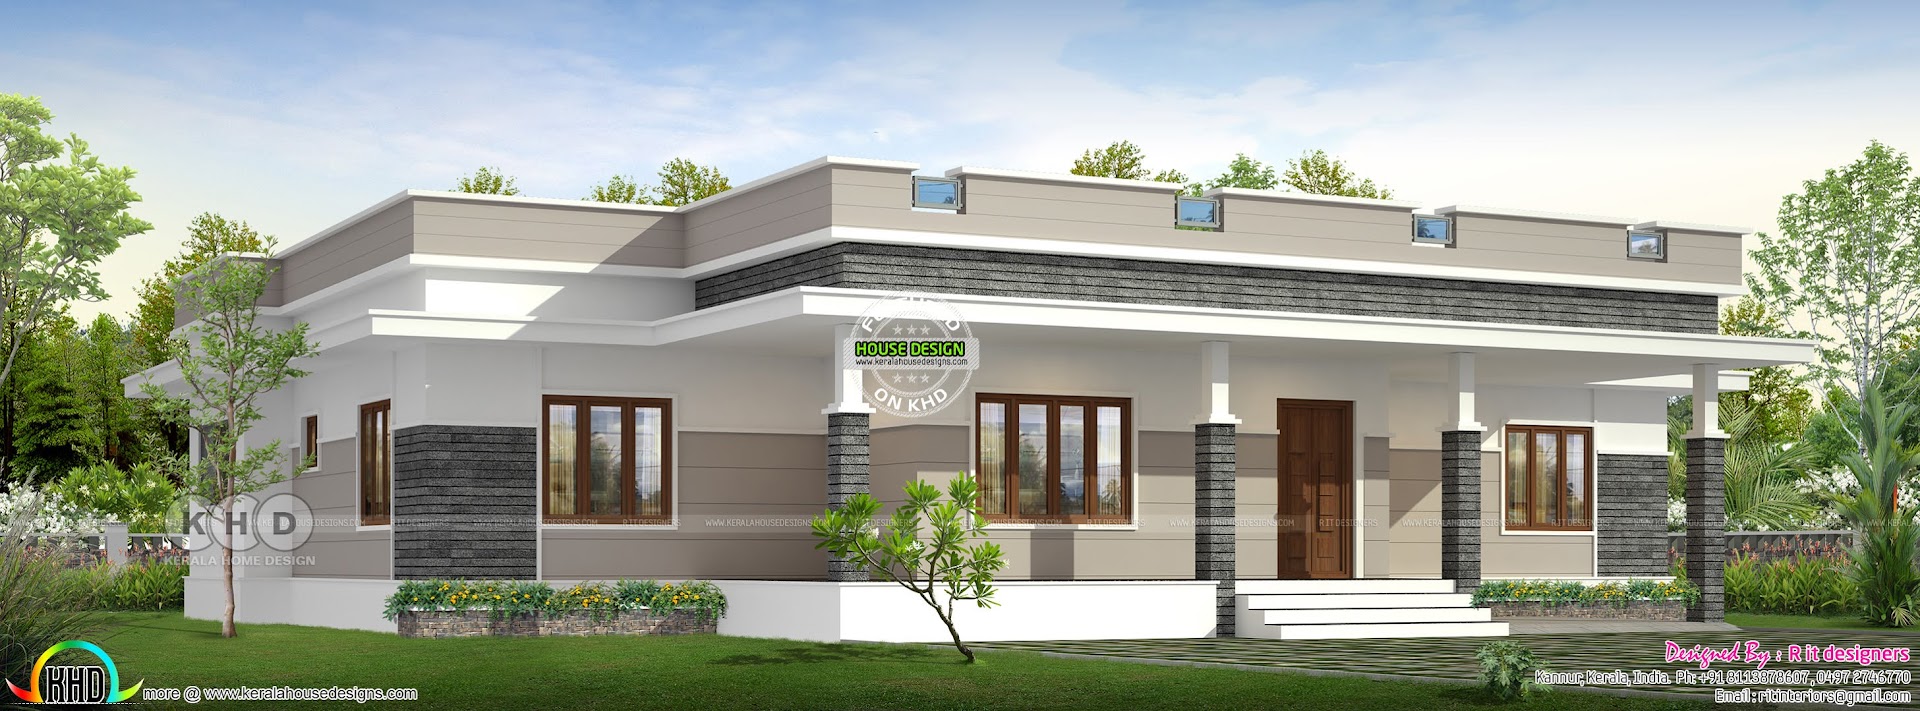 2298 Square Feet 3 Bedroom Flat Roof Home Design Kerala